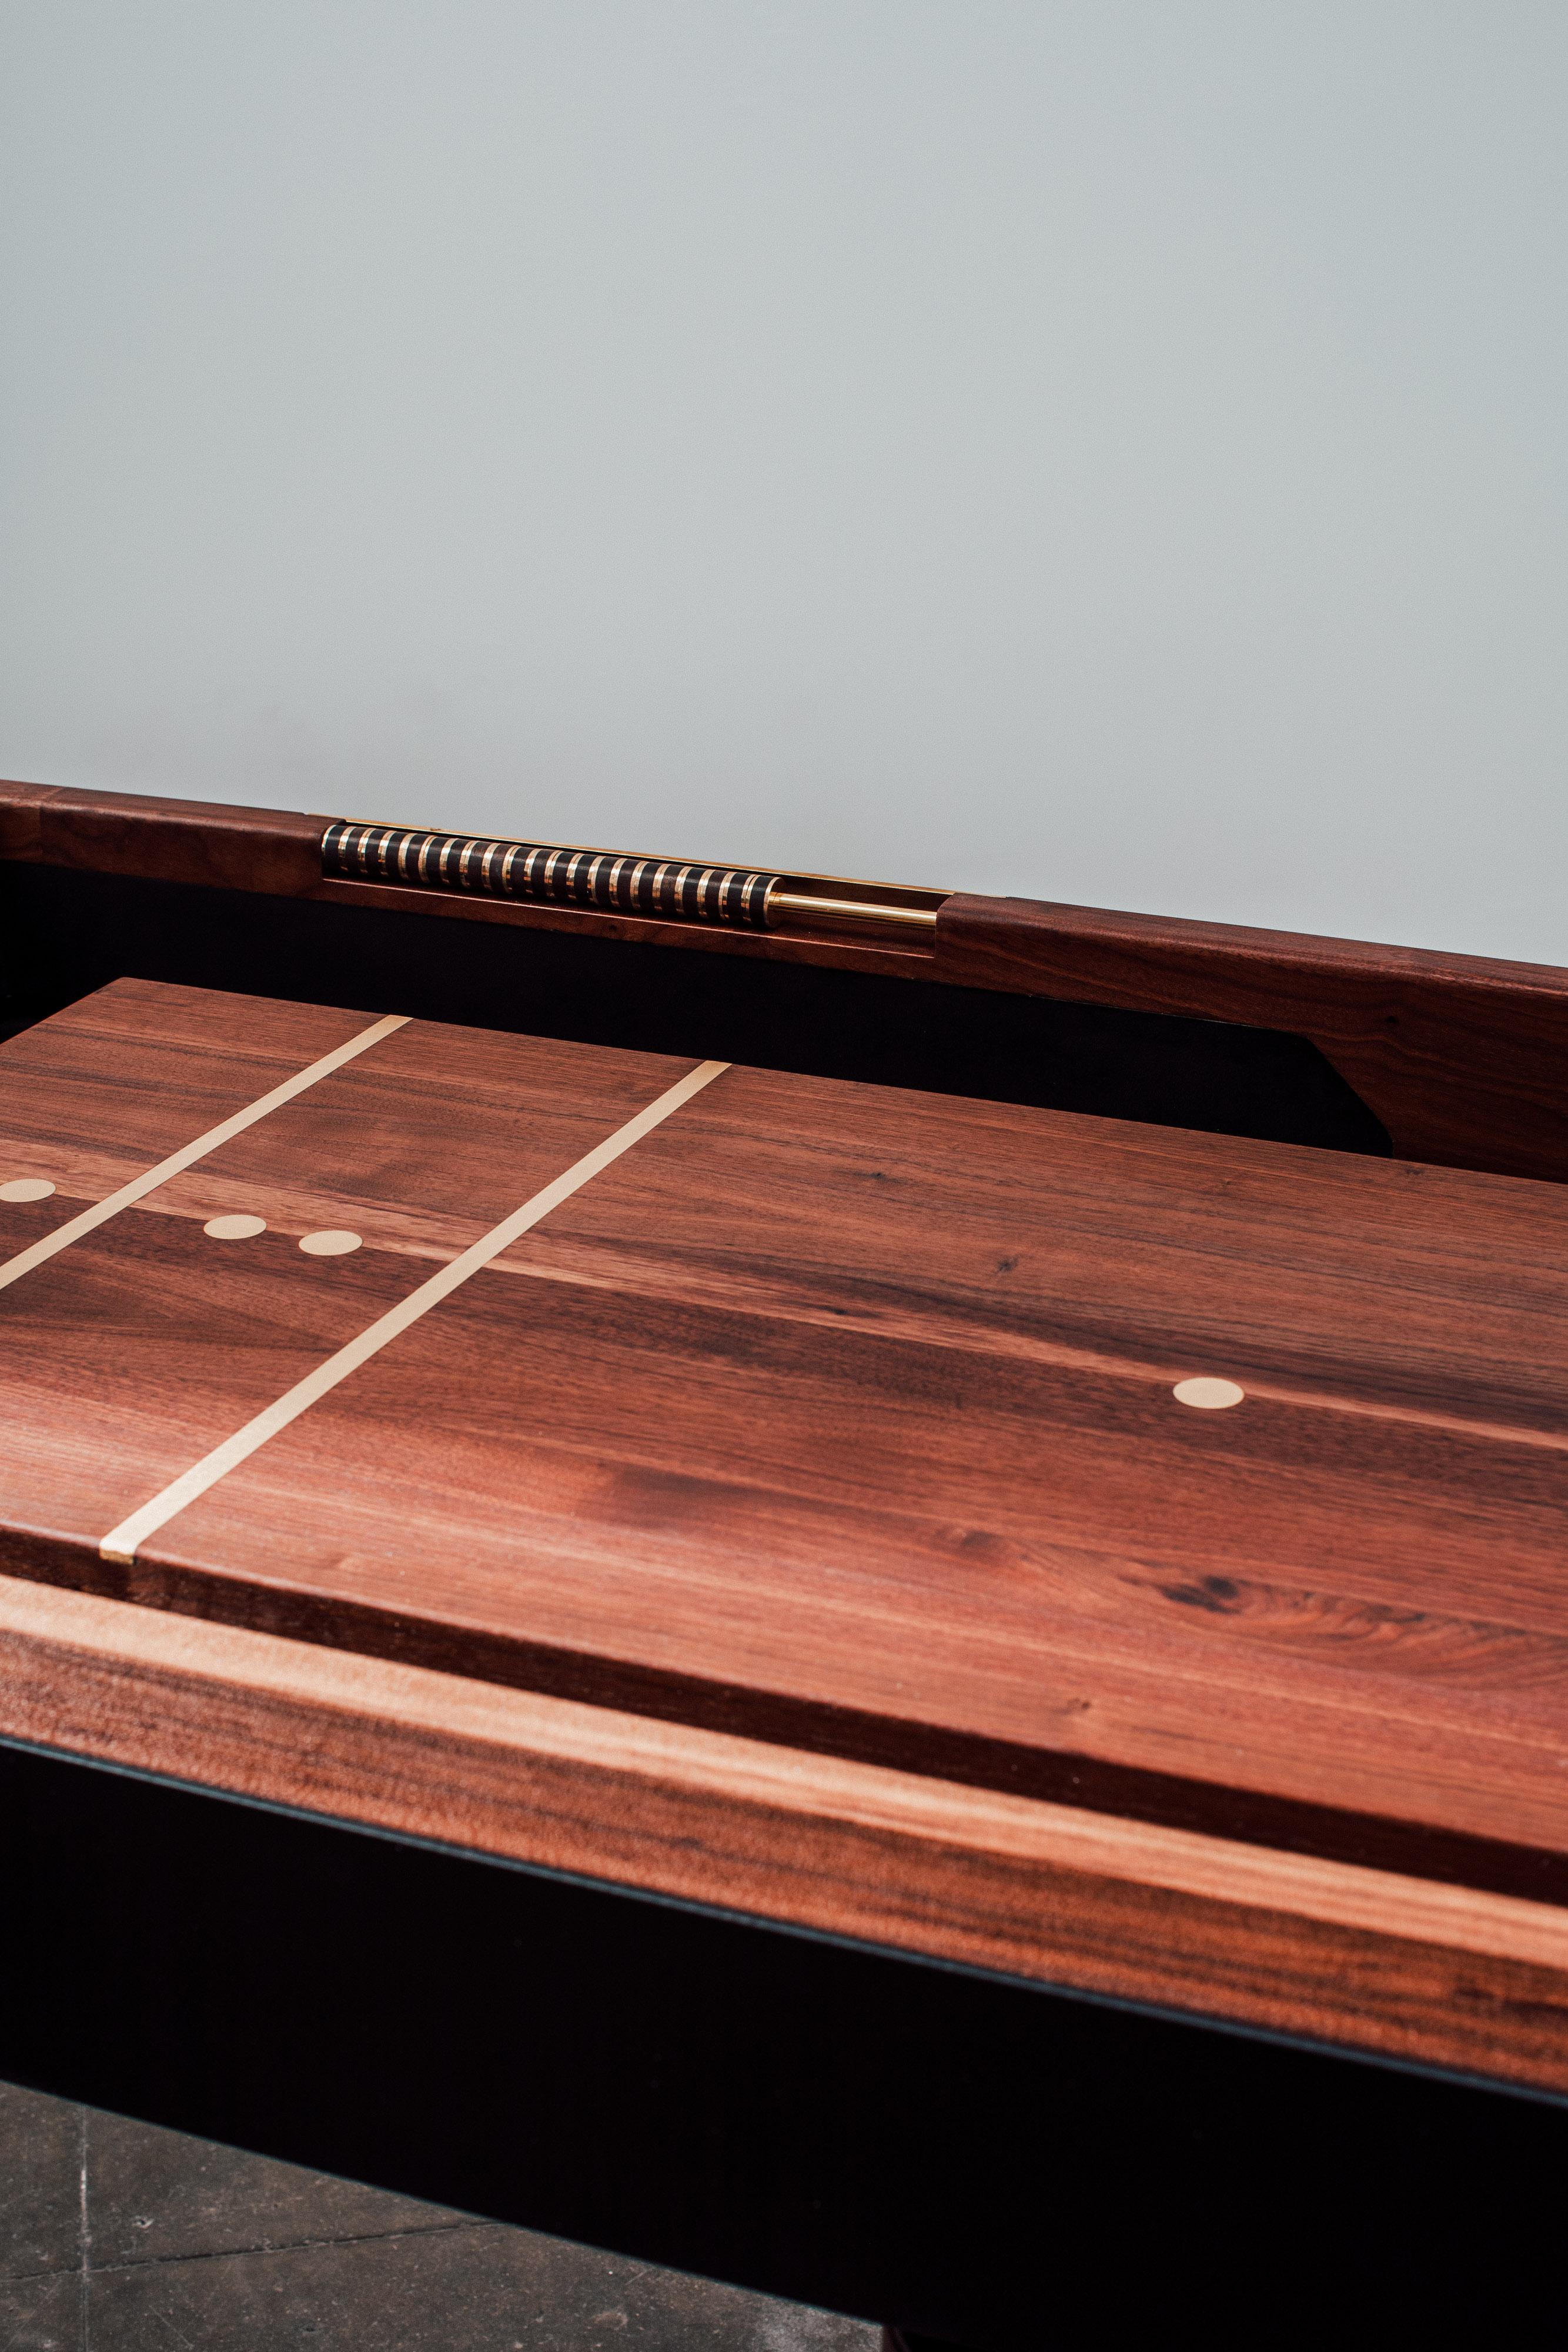 shuffleboard table for sale